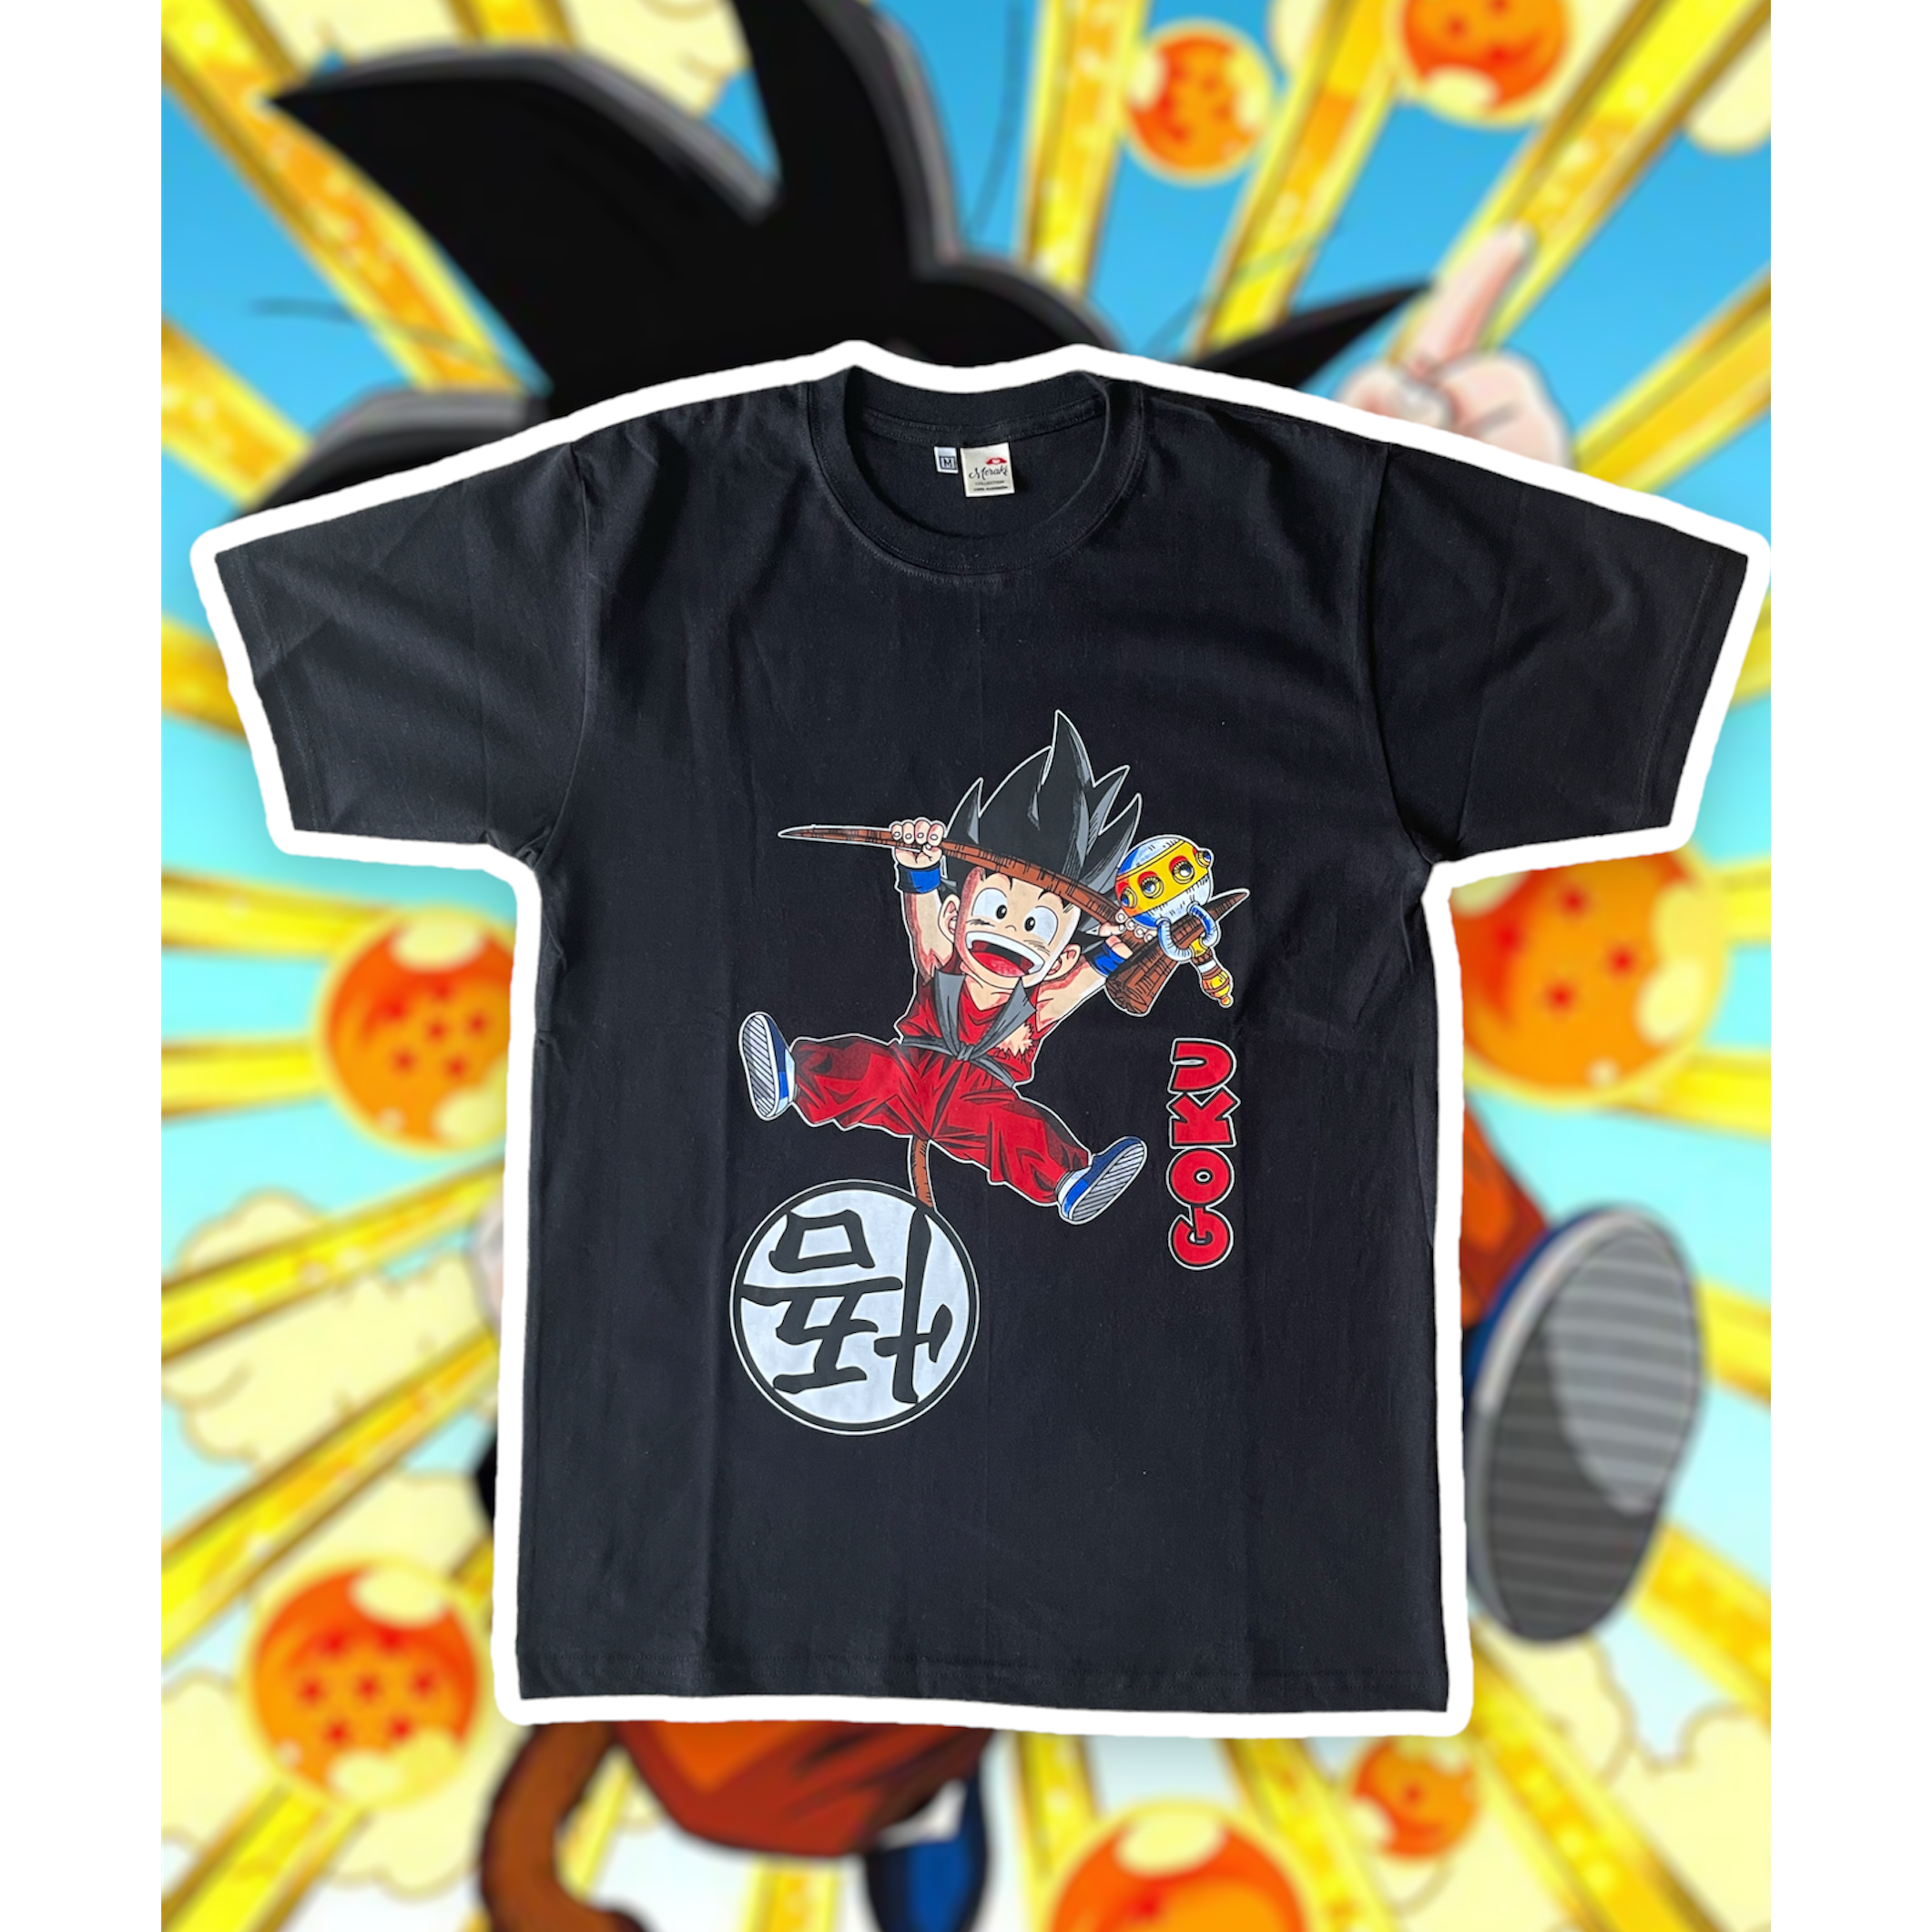 T-shirt modelo Goku talla M